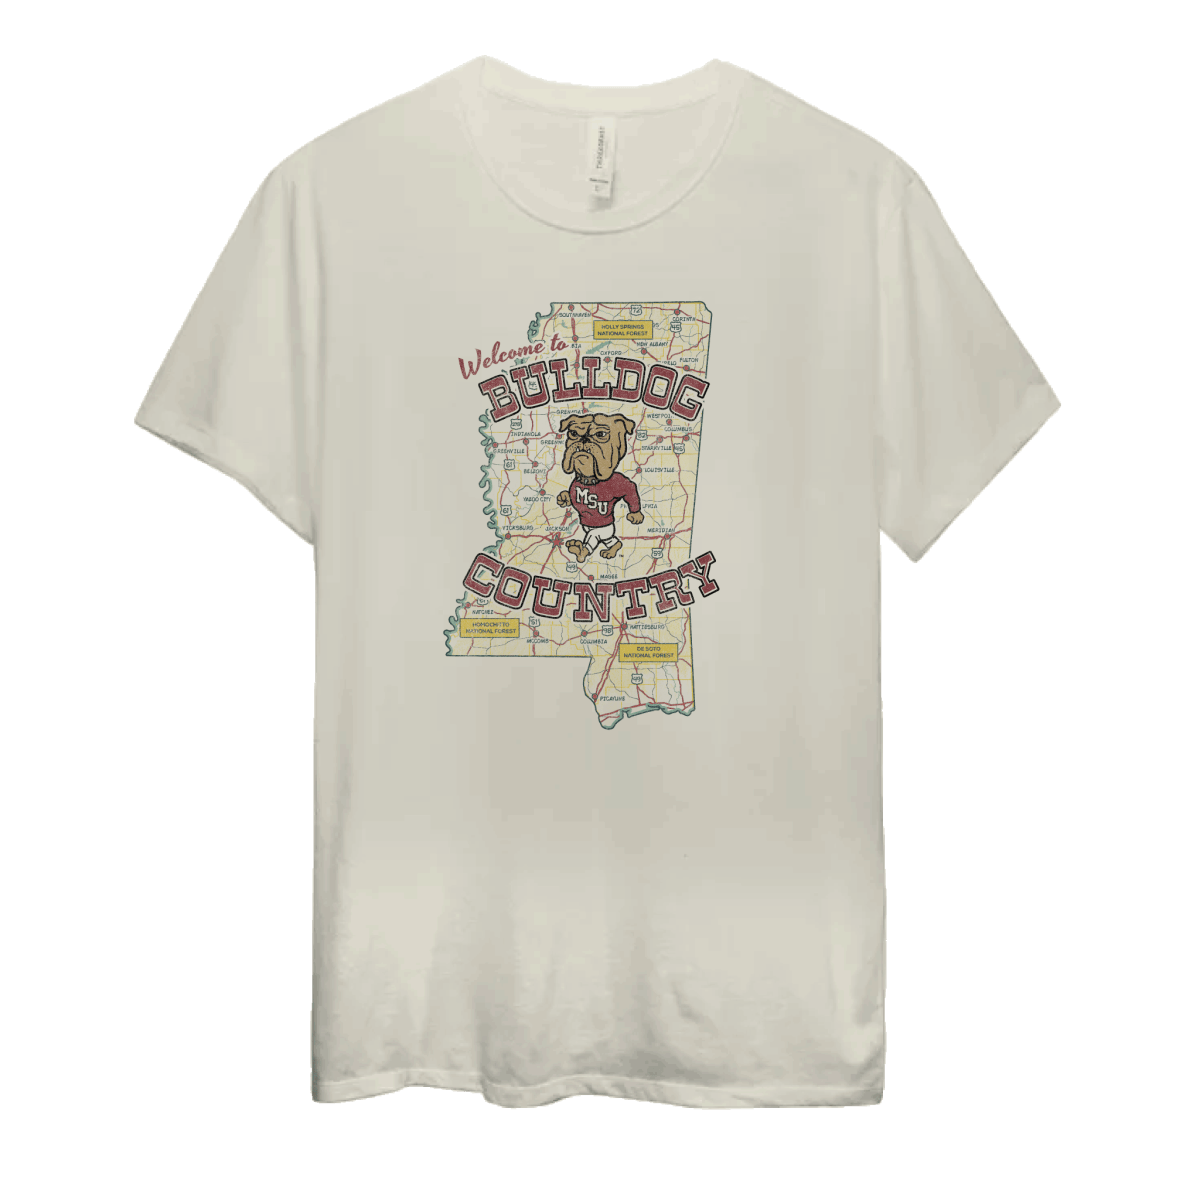 MSU Bulldog Country T-Shirt - Shop B-Unlimited